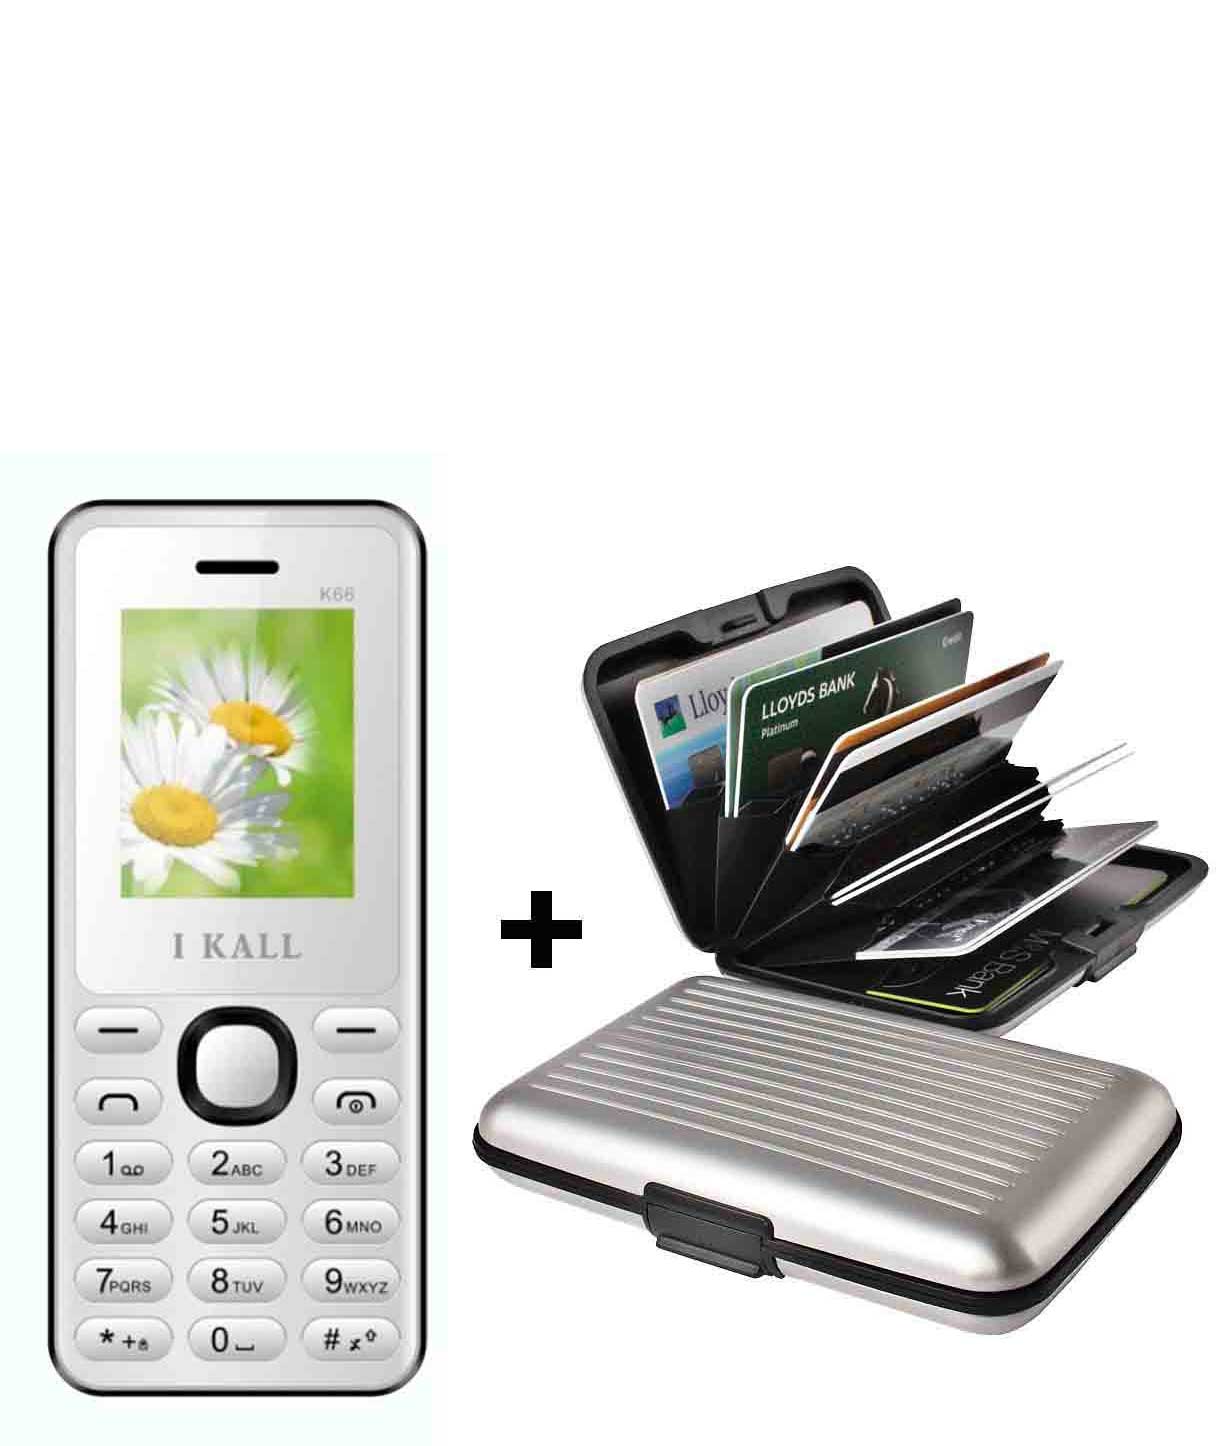 IKALL K66 Multimedia Mobile with Aluminium White Wallet